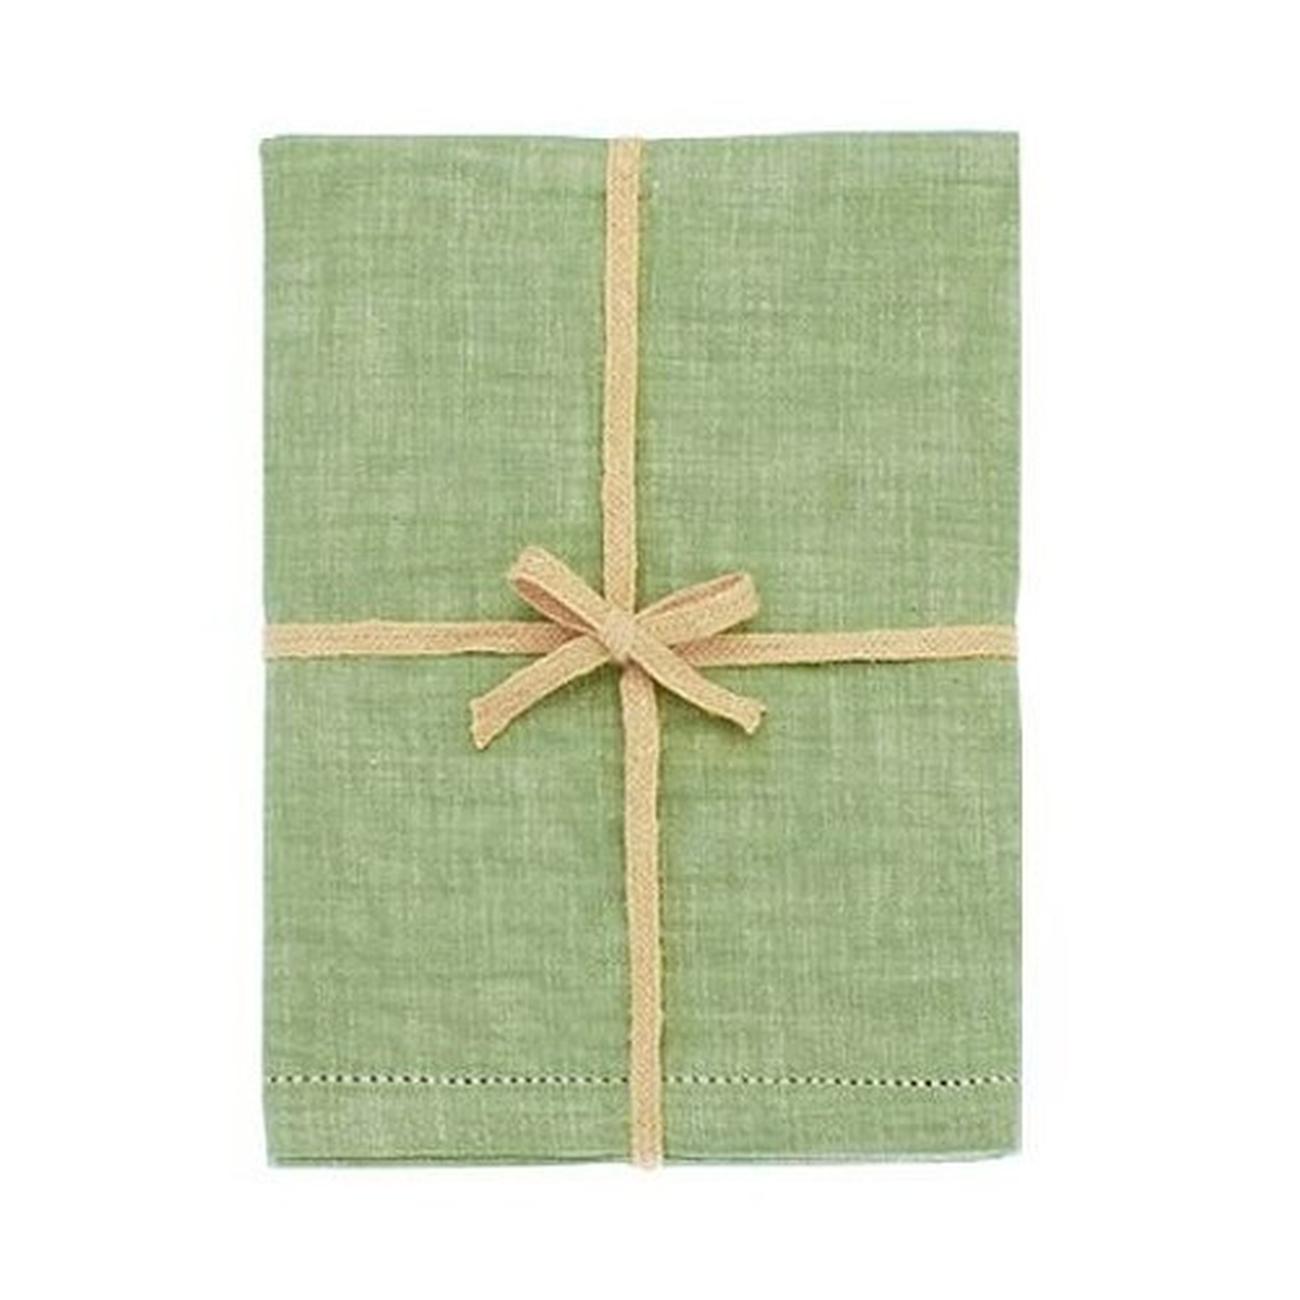 walton-olive-green-chambray-tablecloth-130x180cm - Walton & Co Chambray Tablecloth Olive Green 130x180cm